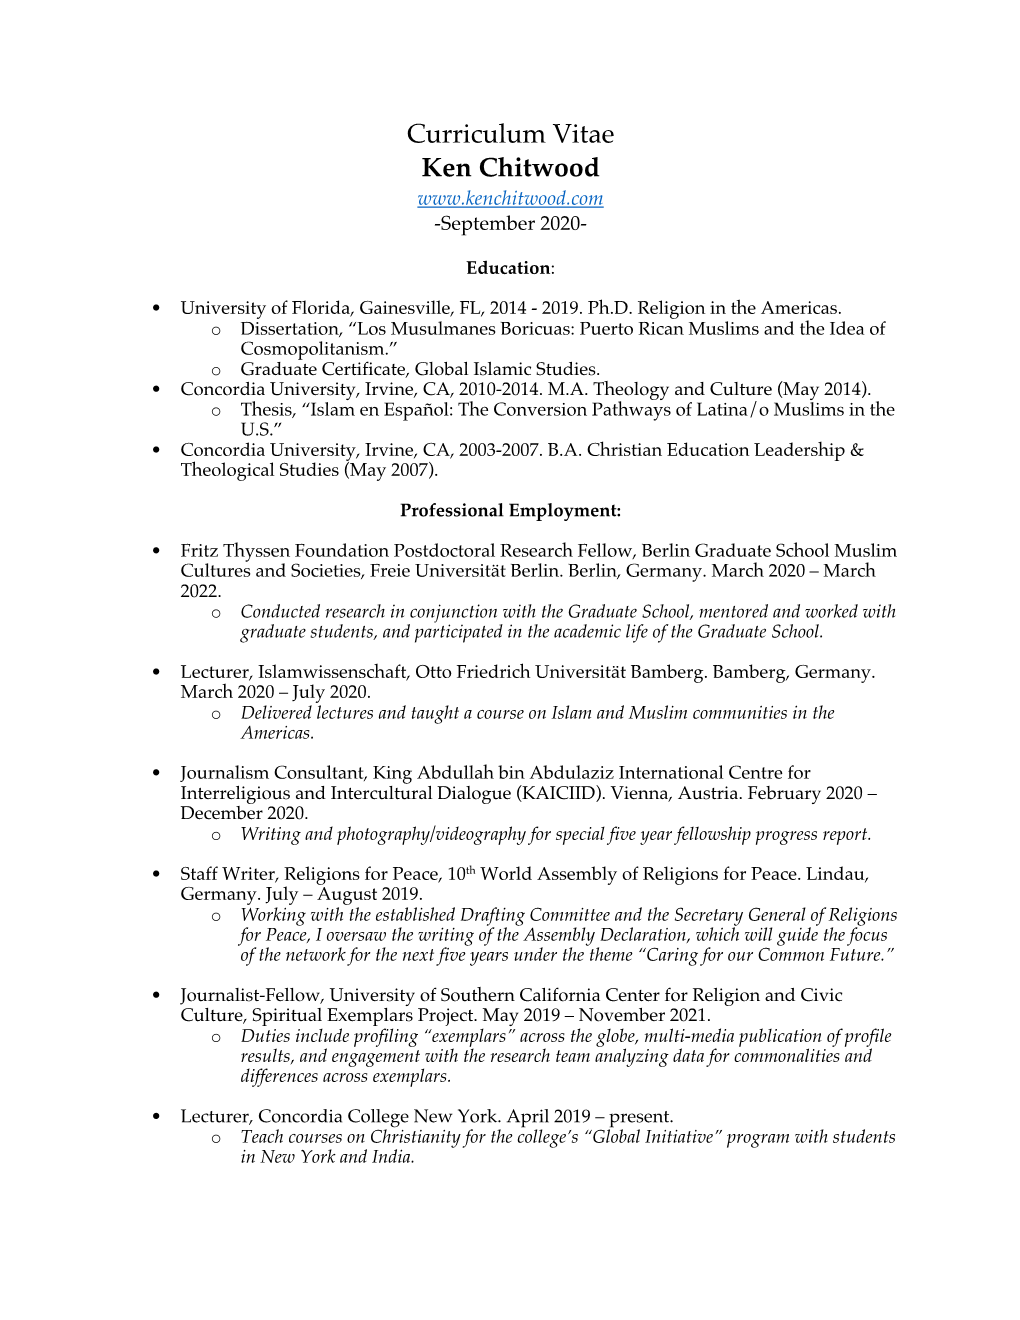 Curriculum Vitae Ken Chitwood -September 2020